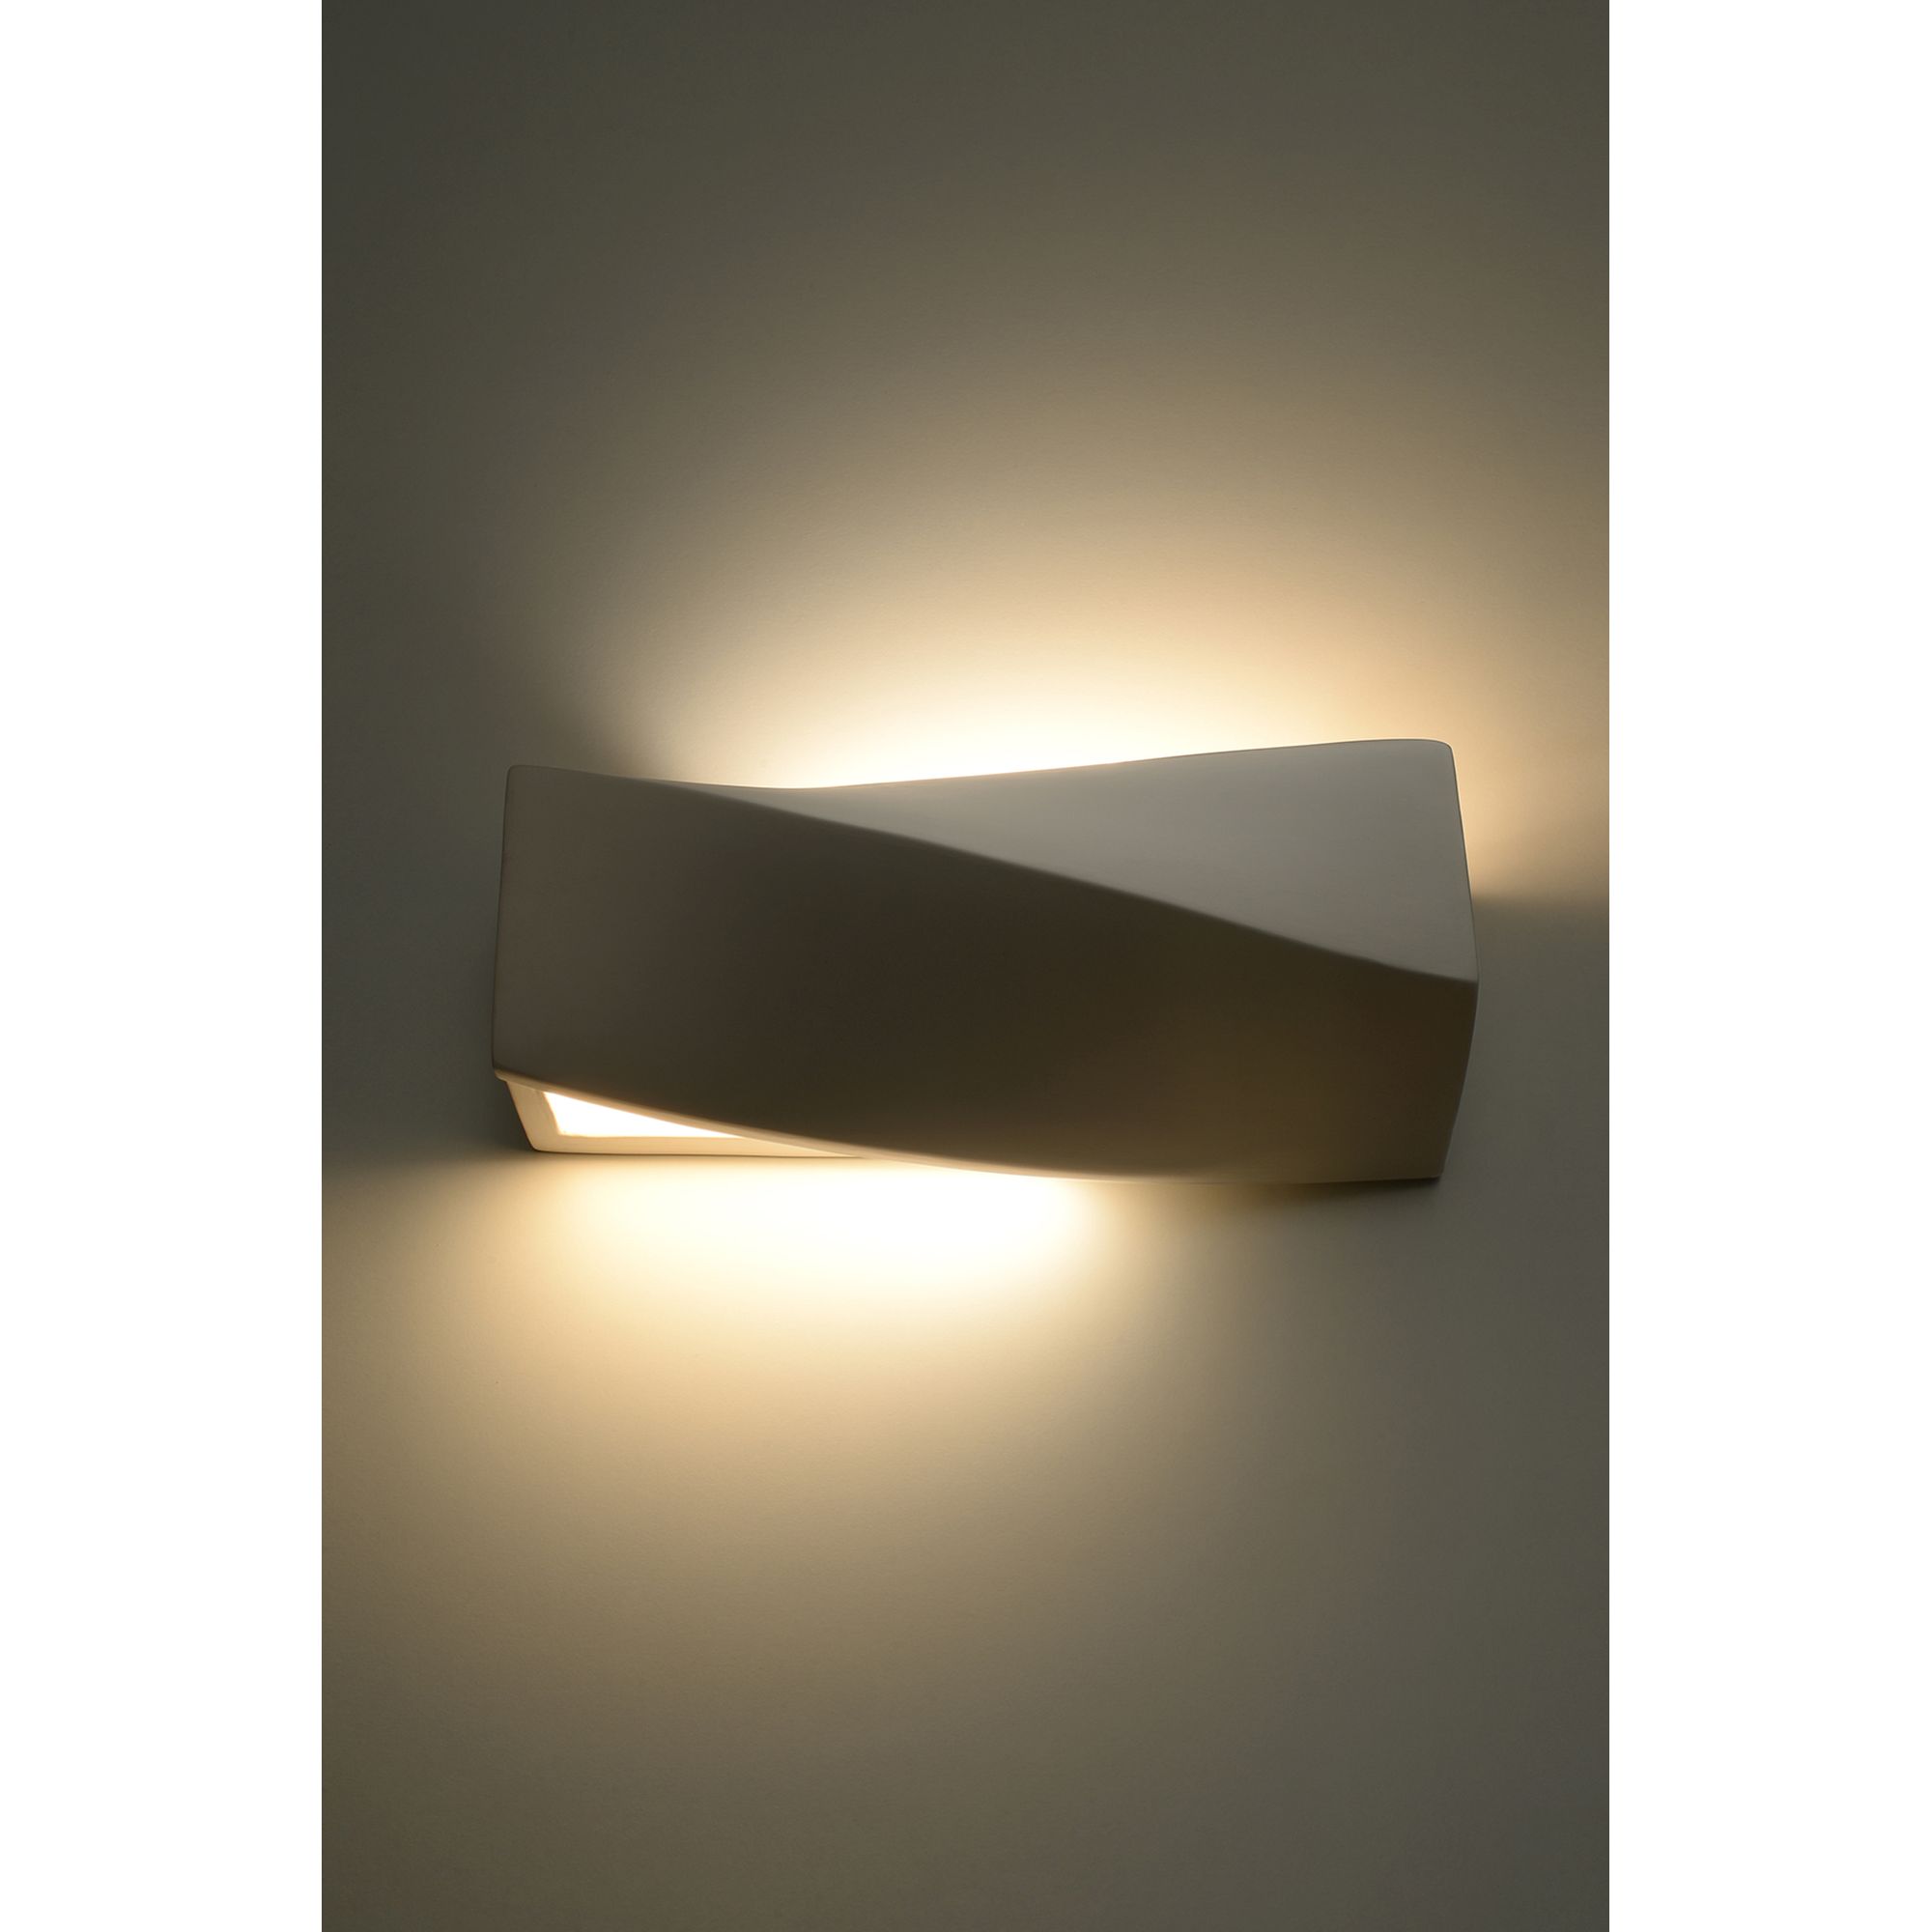 Rechteck Wandlampe Up- gedrehtes Downlight | E27 Wandleuchte WOHNLICHT Varianten leicht erhältlich 4 in and